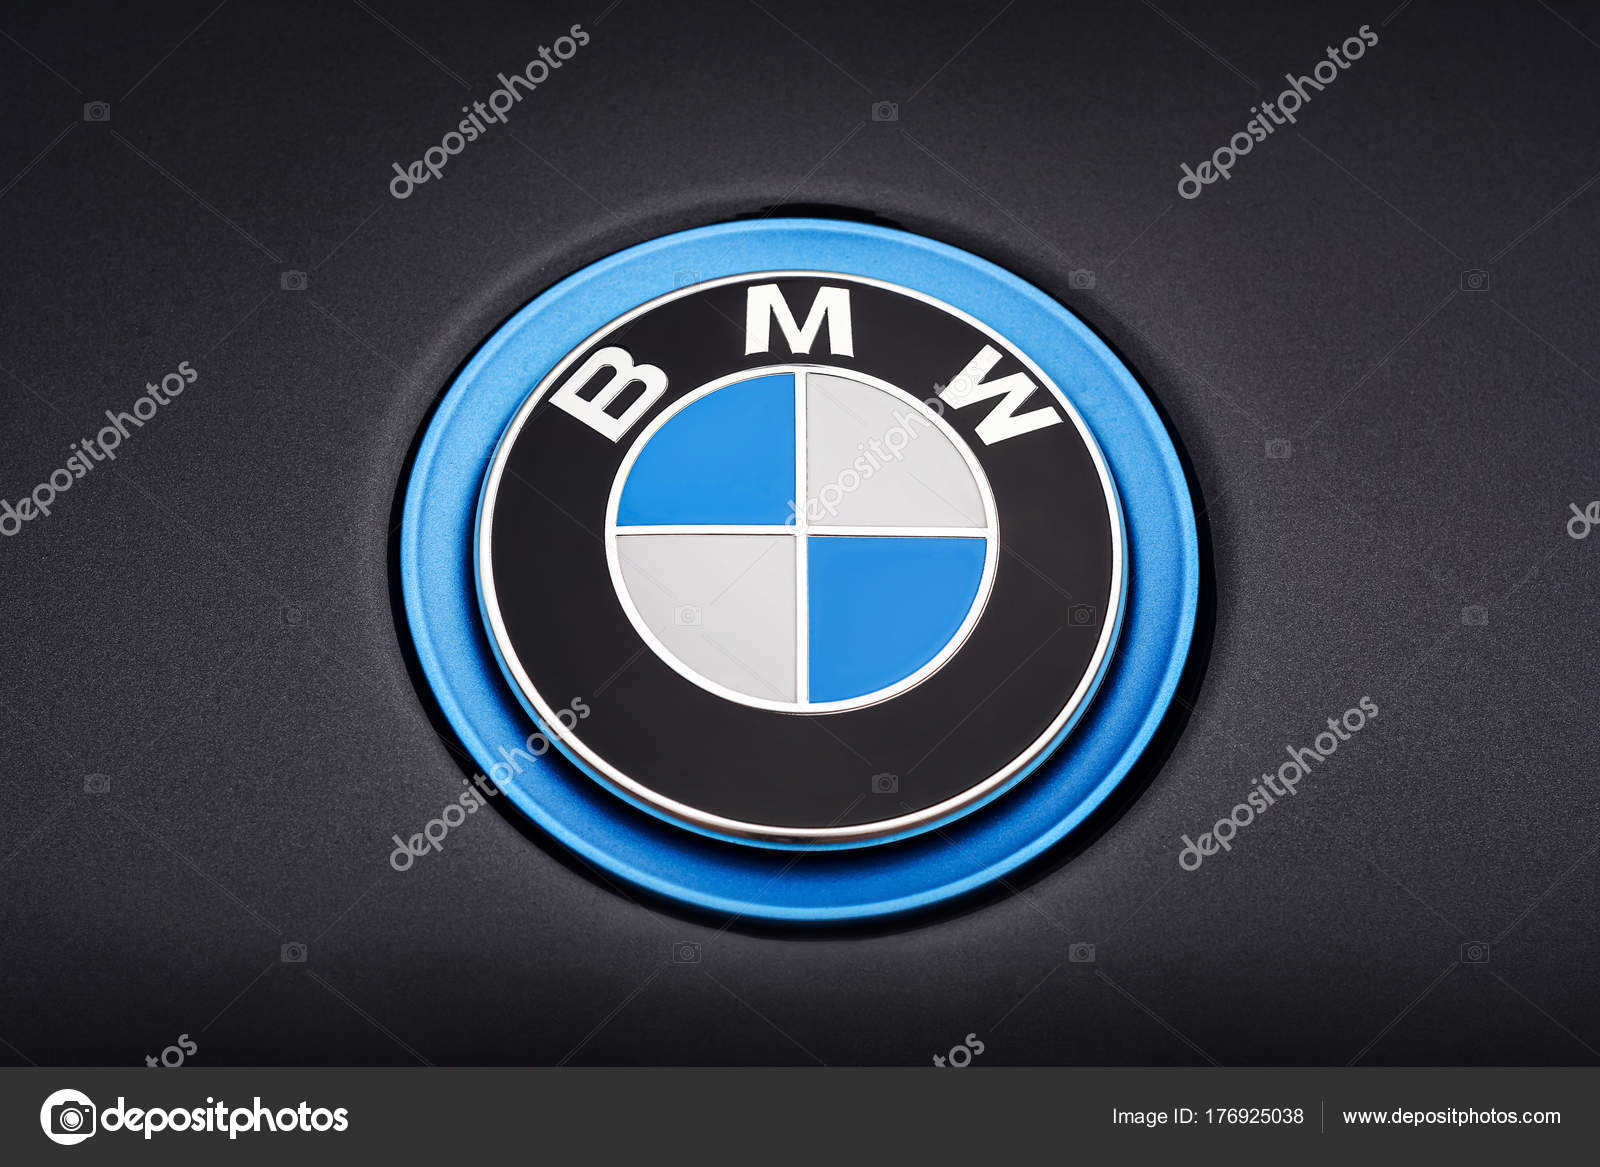 Bmw logo Stock Photos, Royalty Free Bmw logo Images | Depositphotos